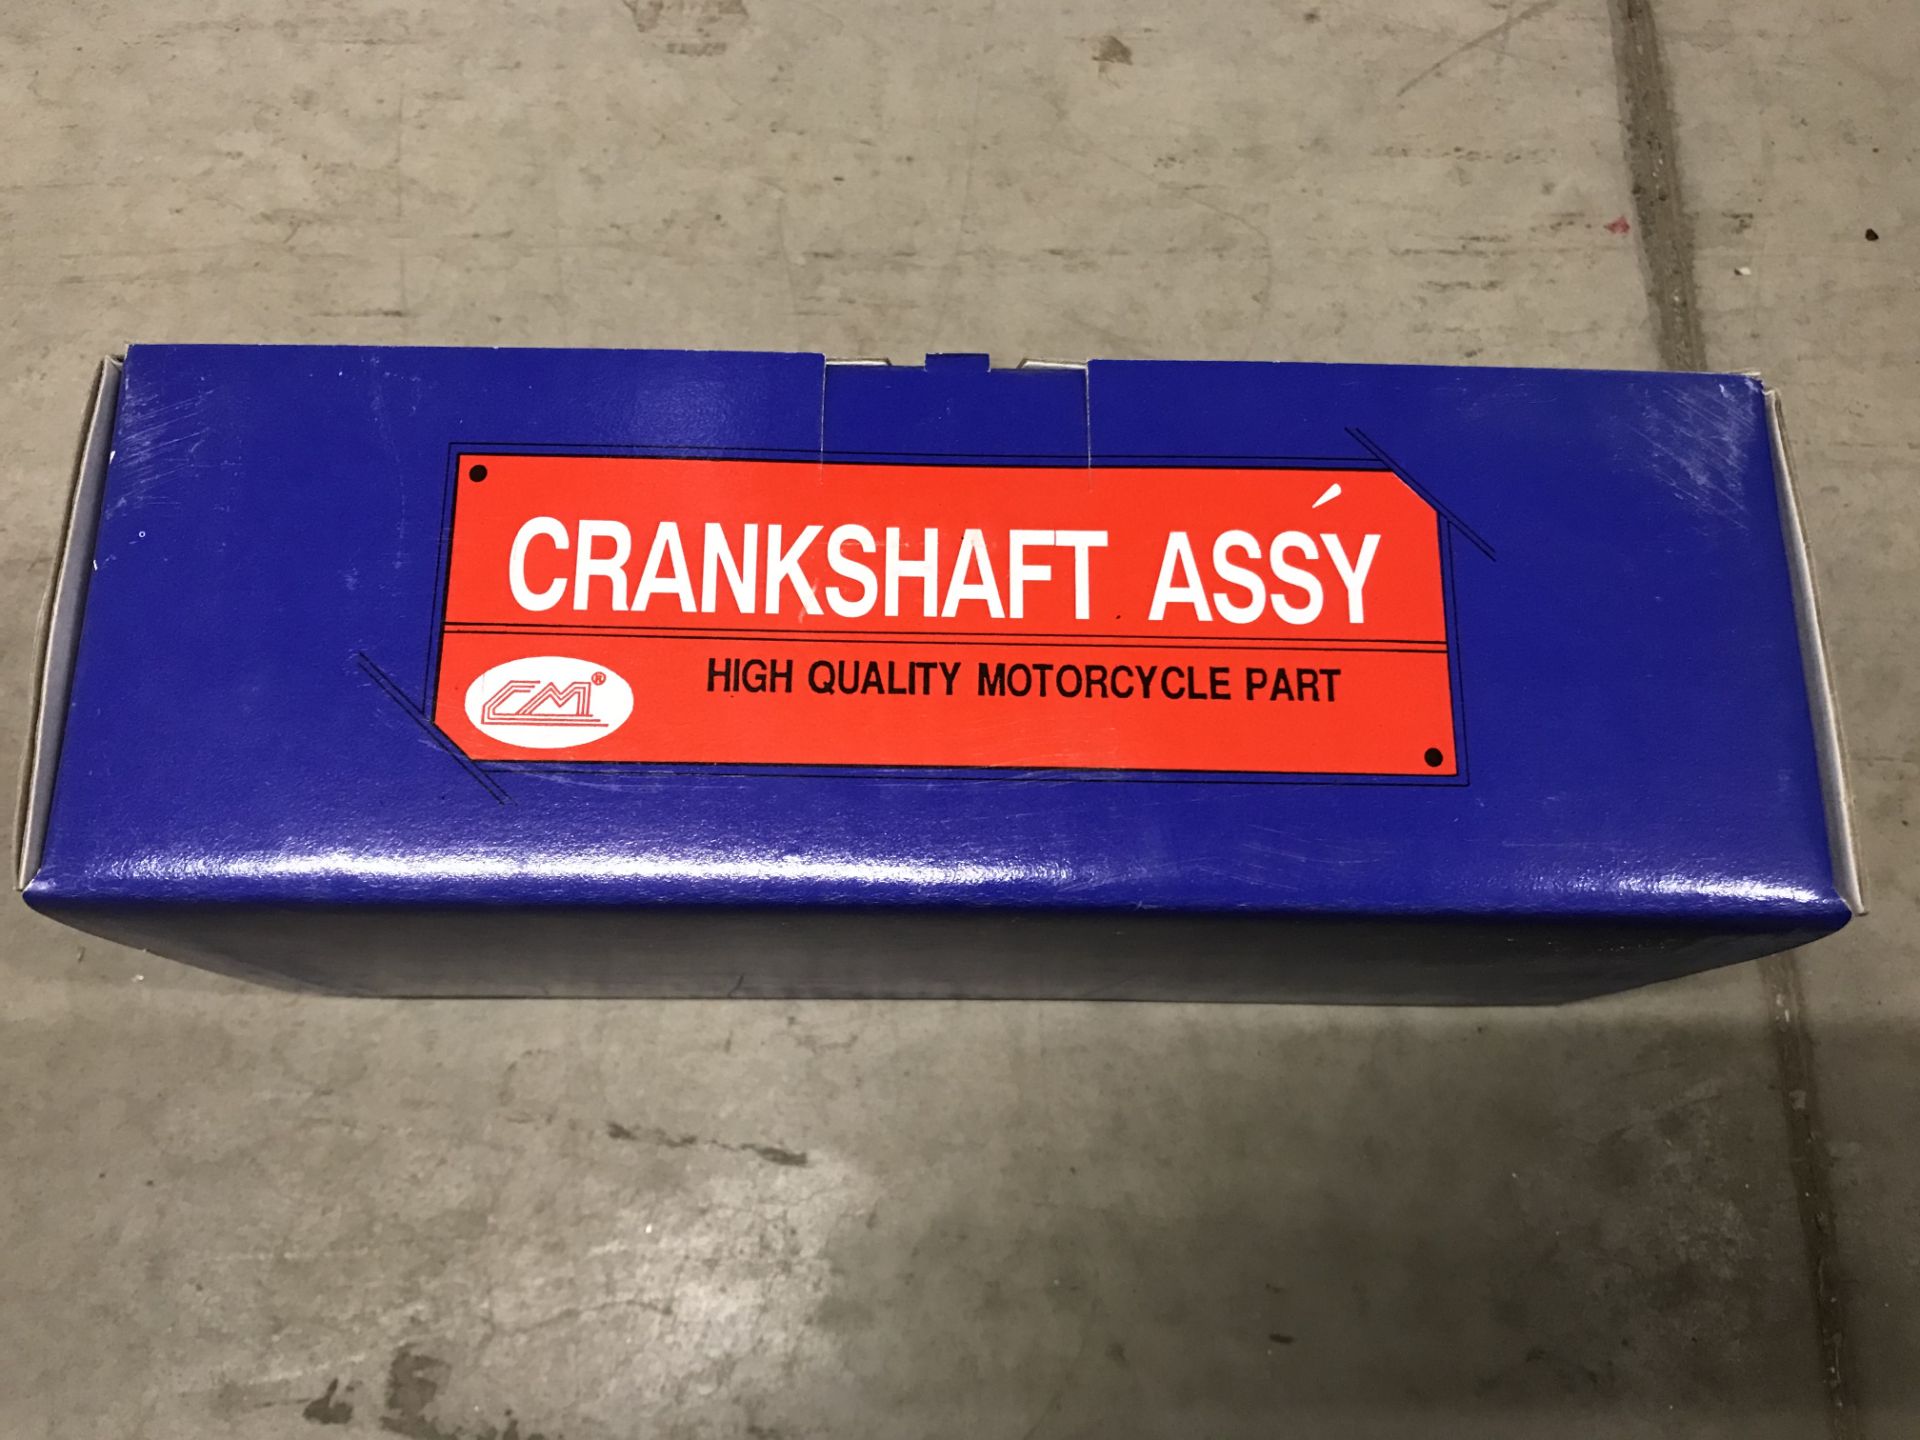 2 x Crankshaft Assy CPI-CPH crank tapered shafts - boxed - Image 2 of 2